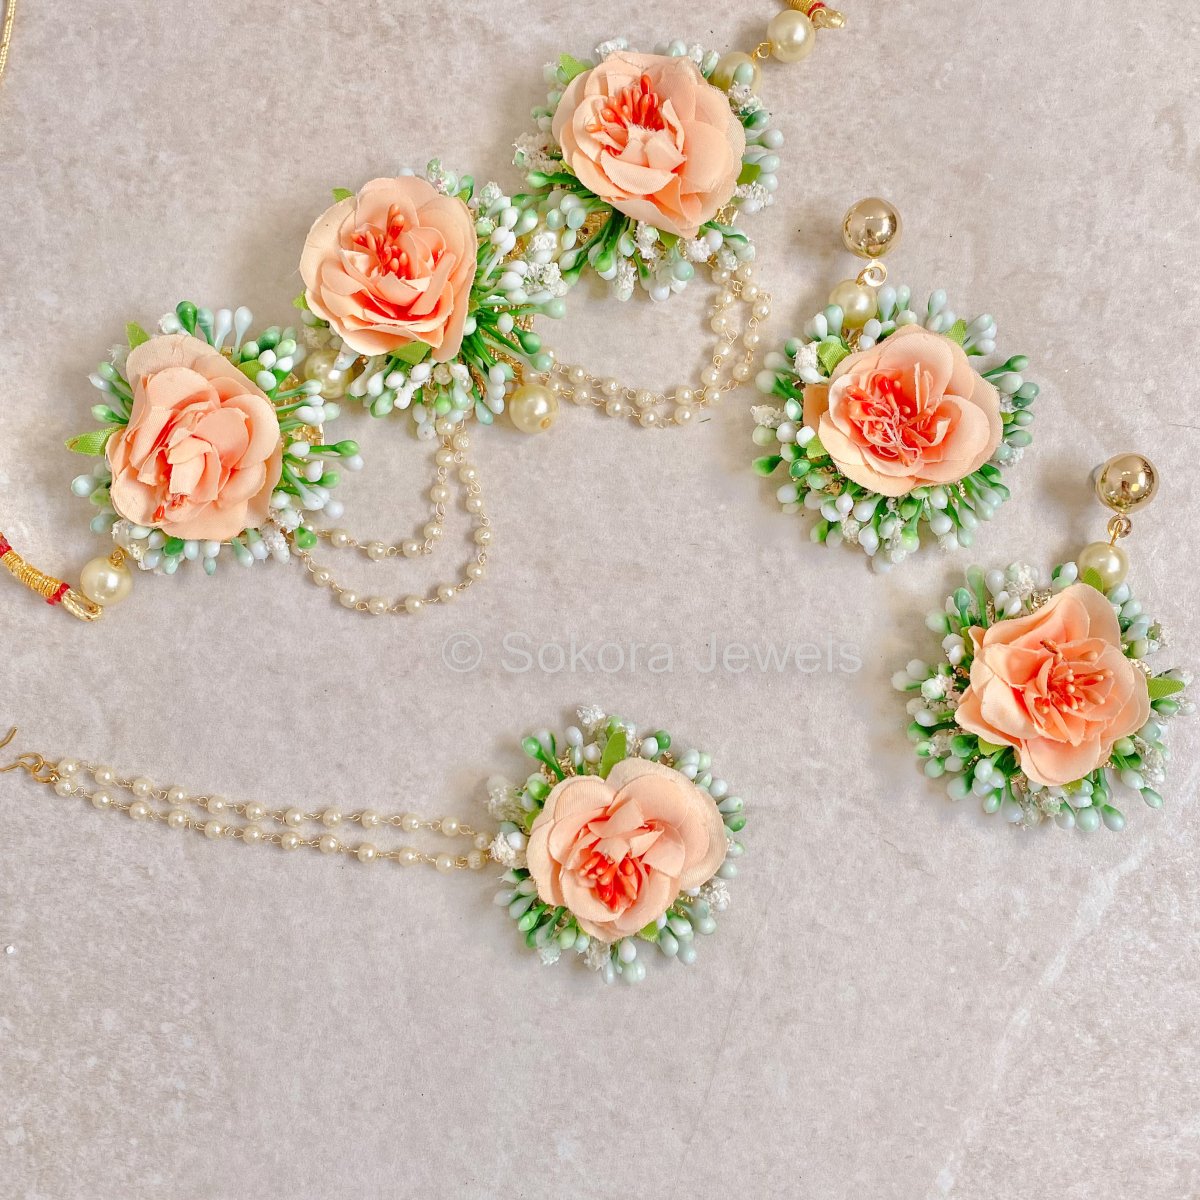 Peach Rose Floral Necklace set - SOKORA JEWELSPeach Rose Floral Necklace set